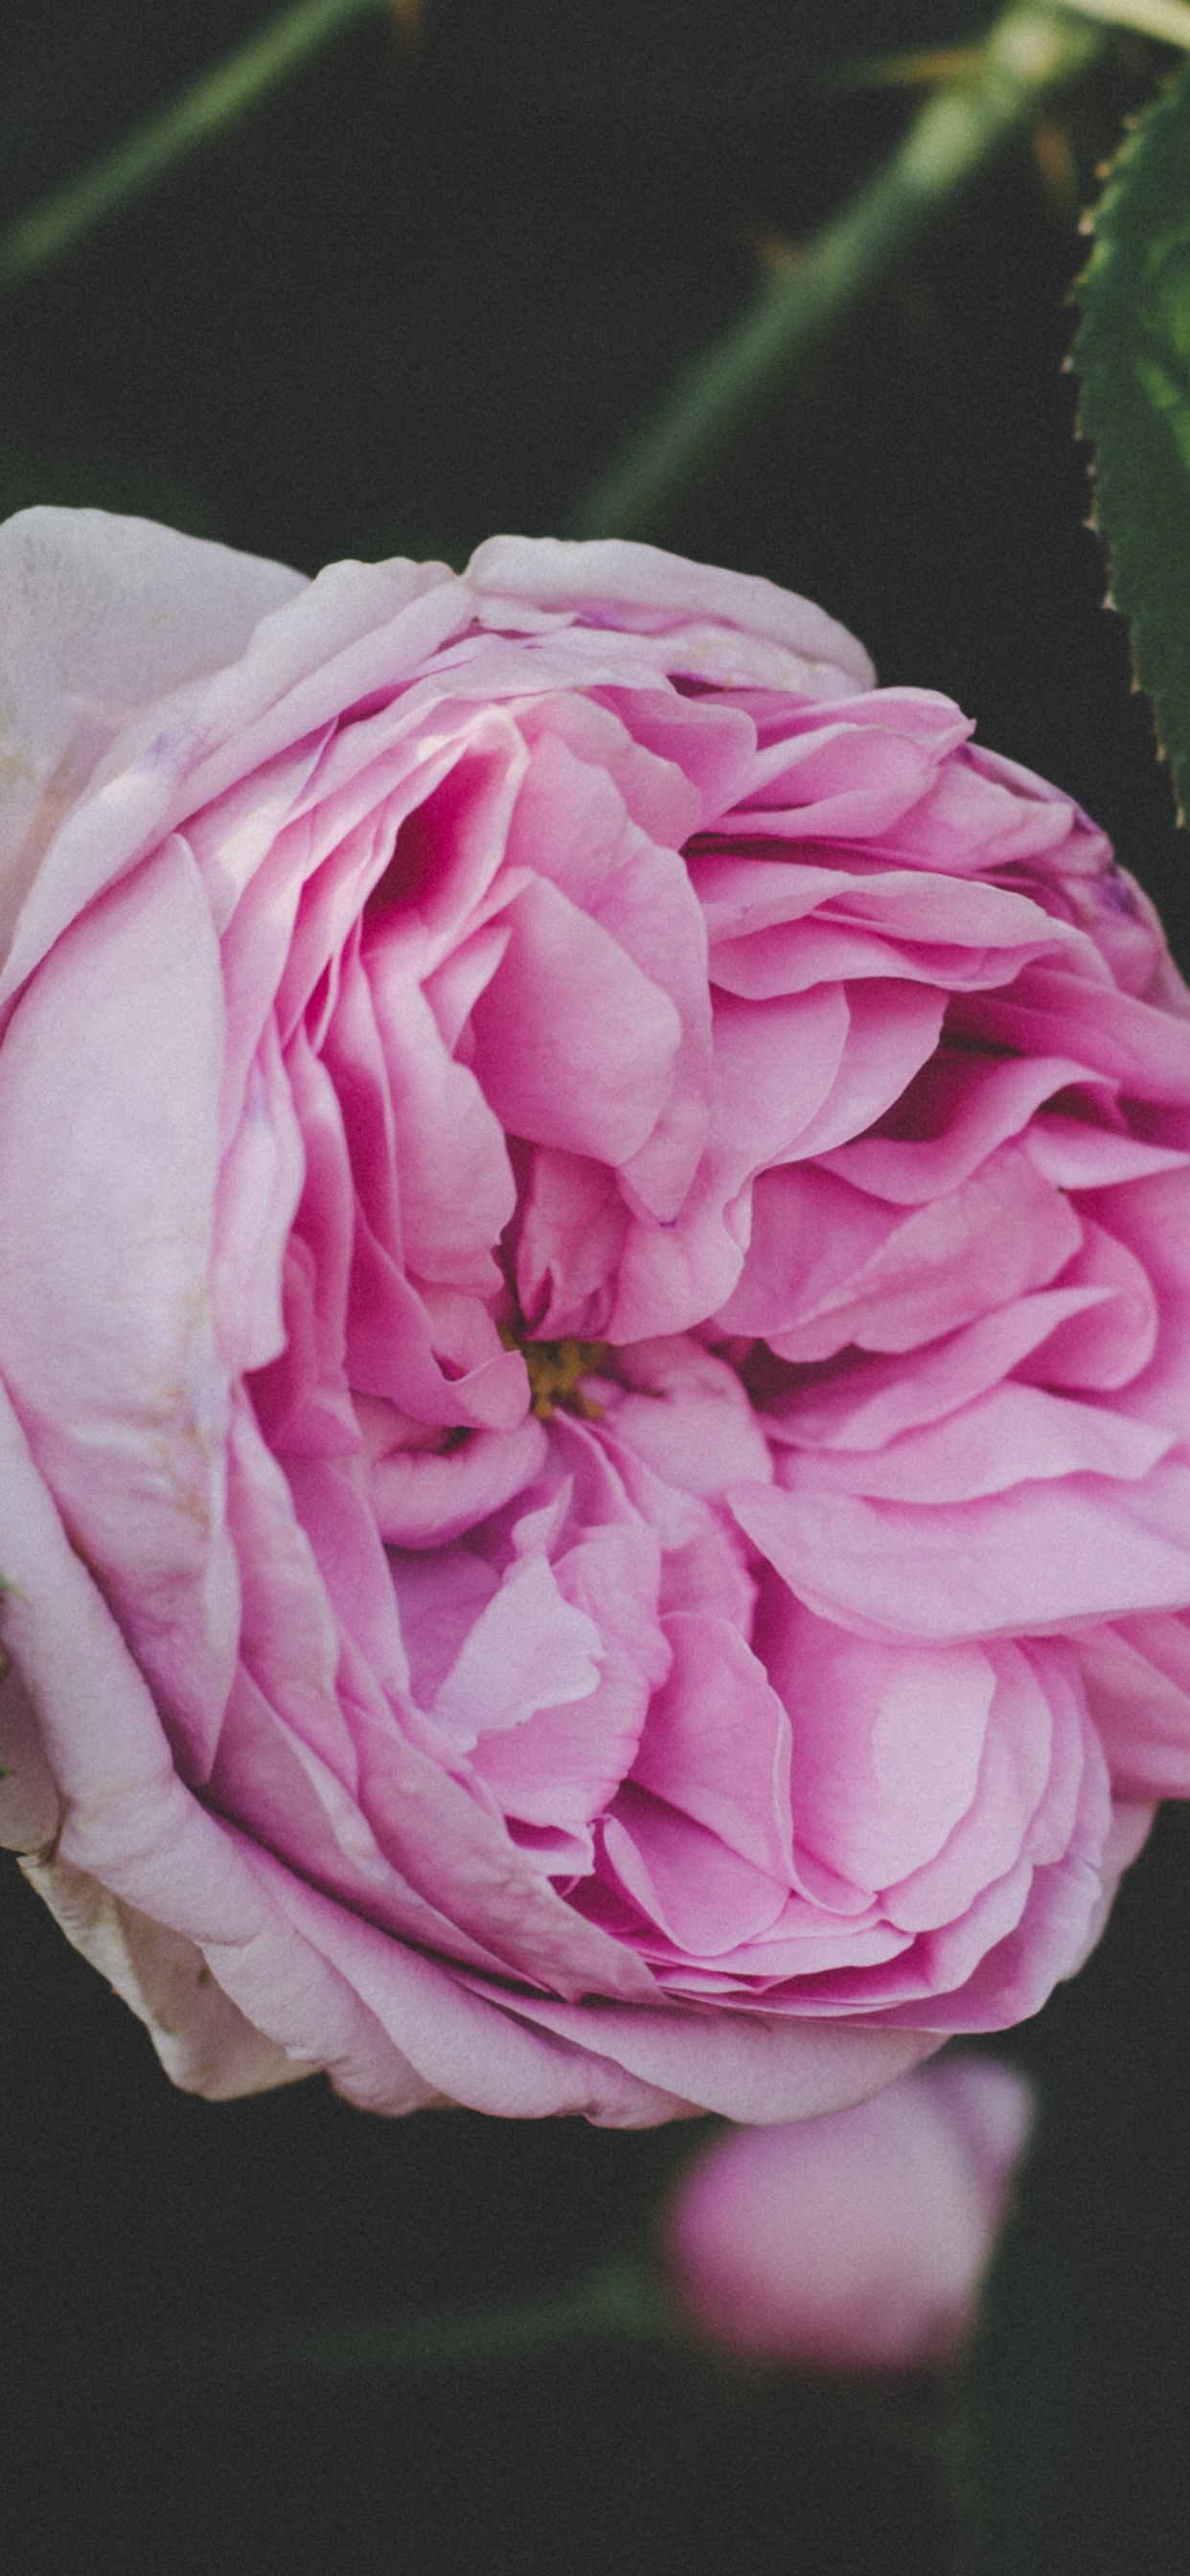 Rose Rose en Fleurs Pendant la Journée. Wallpaper in 1242x2688 Resolution